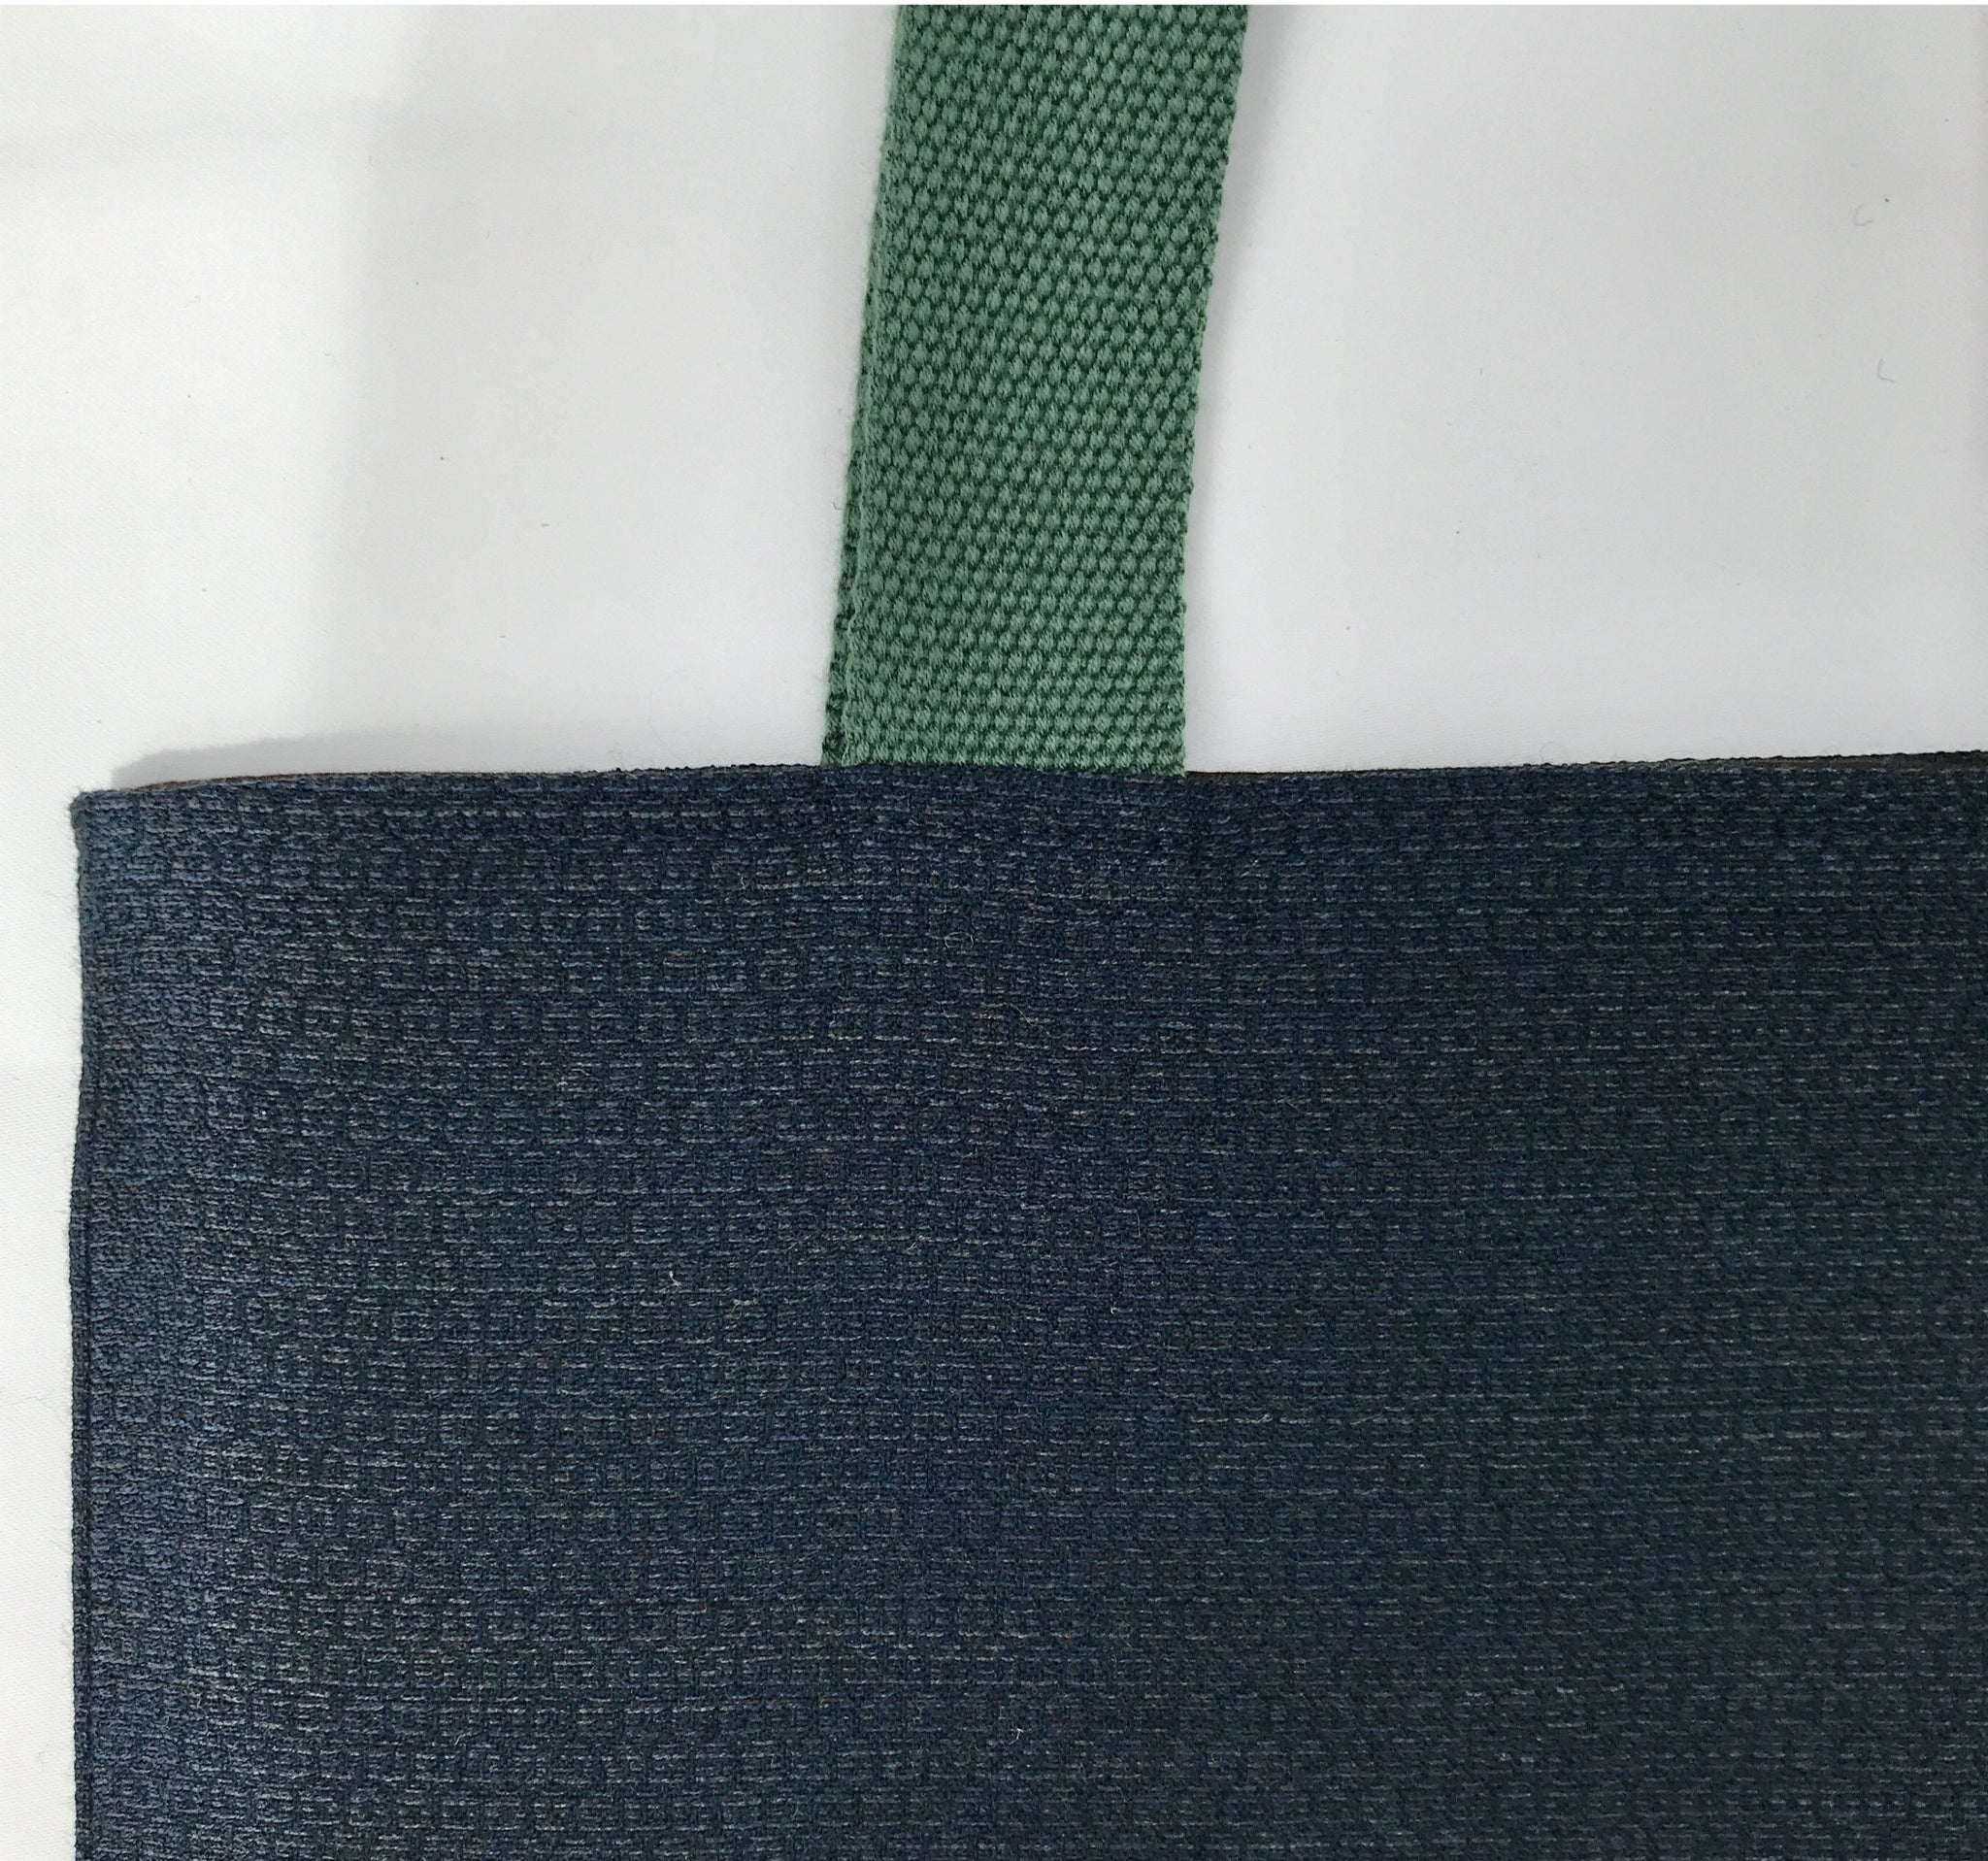 Tote bag. Vintage Japanese kimono fabric with a blue indigo denim bott –  Bits and Totes